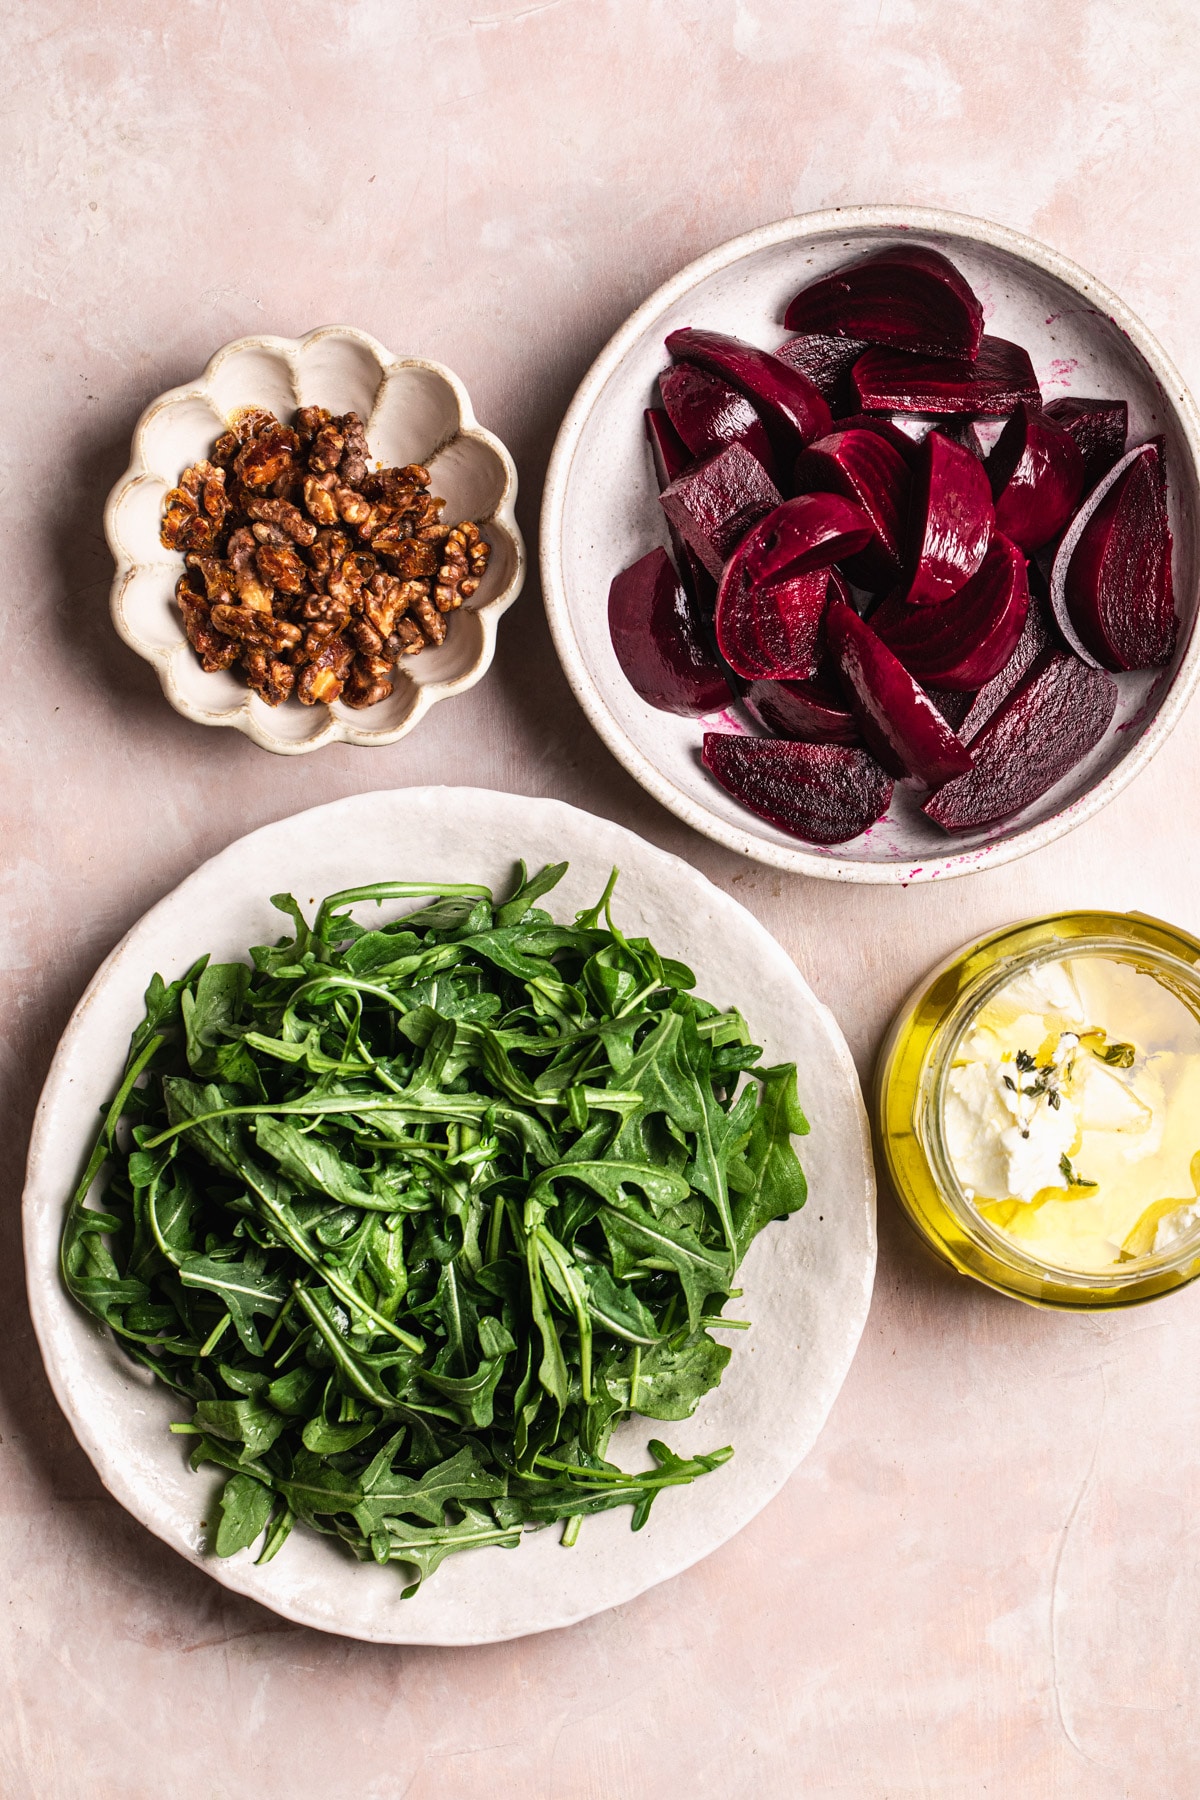 Ingredients for beetroot, feta, walnut salad.